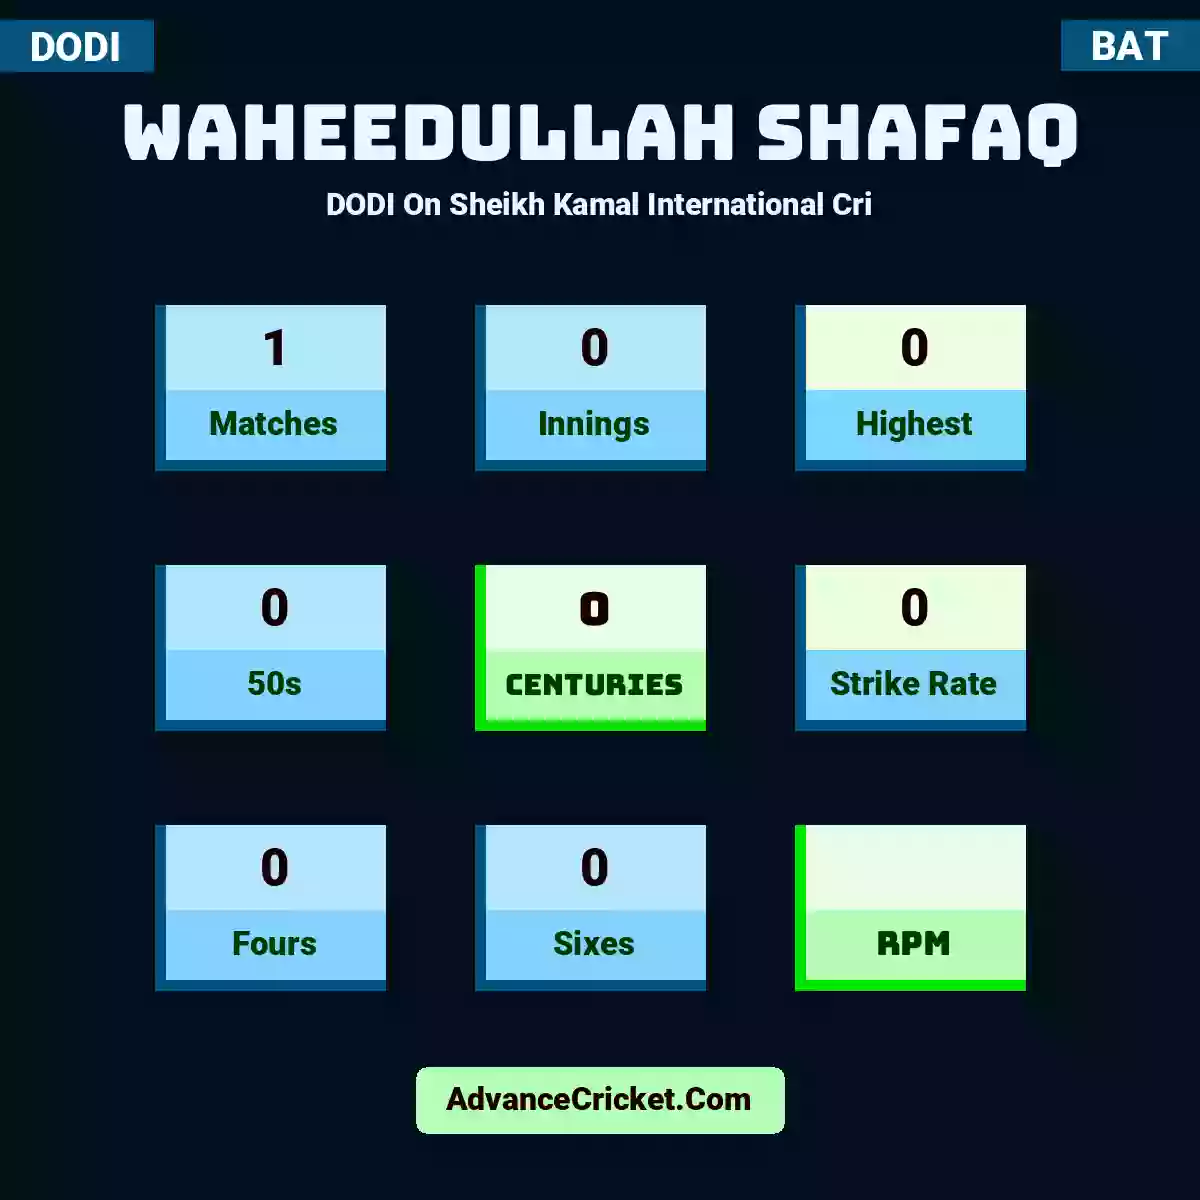 Waheedullah Shafaq DODI  On Sheikh Kamal International Cri, Waheedullah Shafaq played 1 matches, scored 0 runs as highest, 0 half-centuries, and 0 centuries, with a strike rate of 0. W.Shafaq hit 0 fours and 0 sixes.